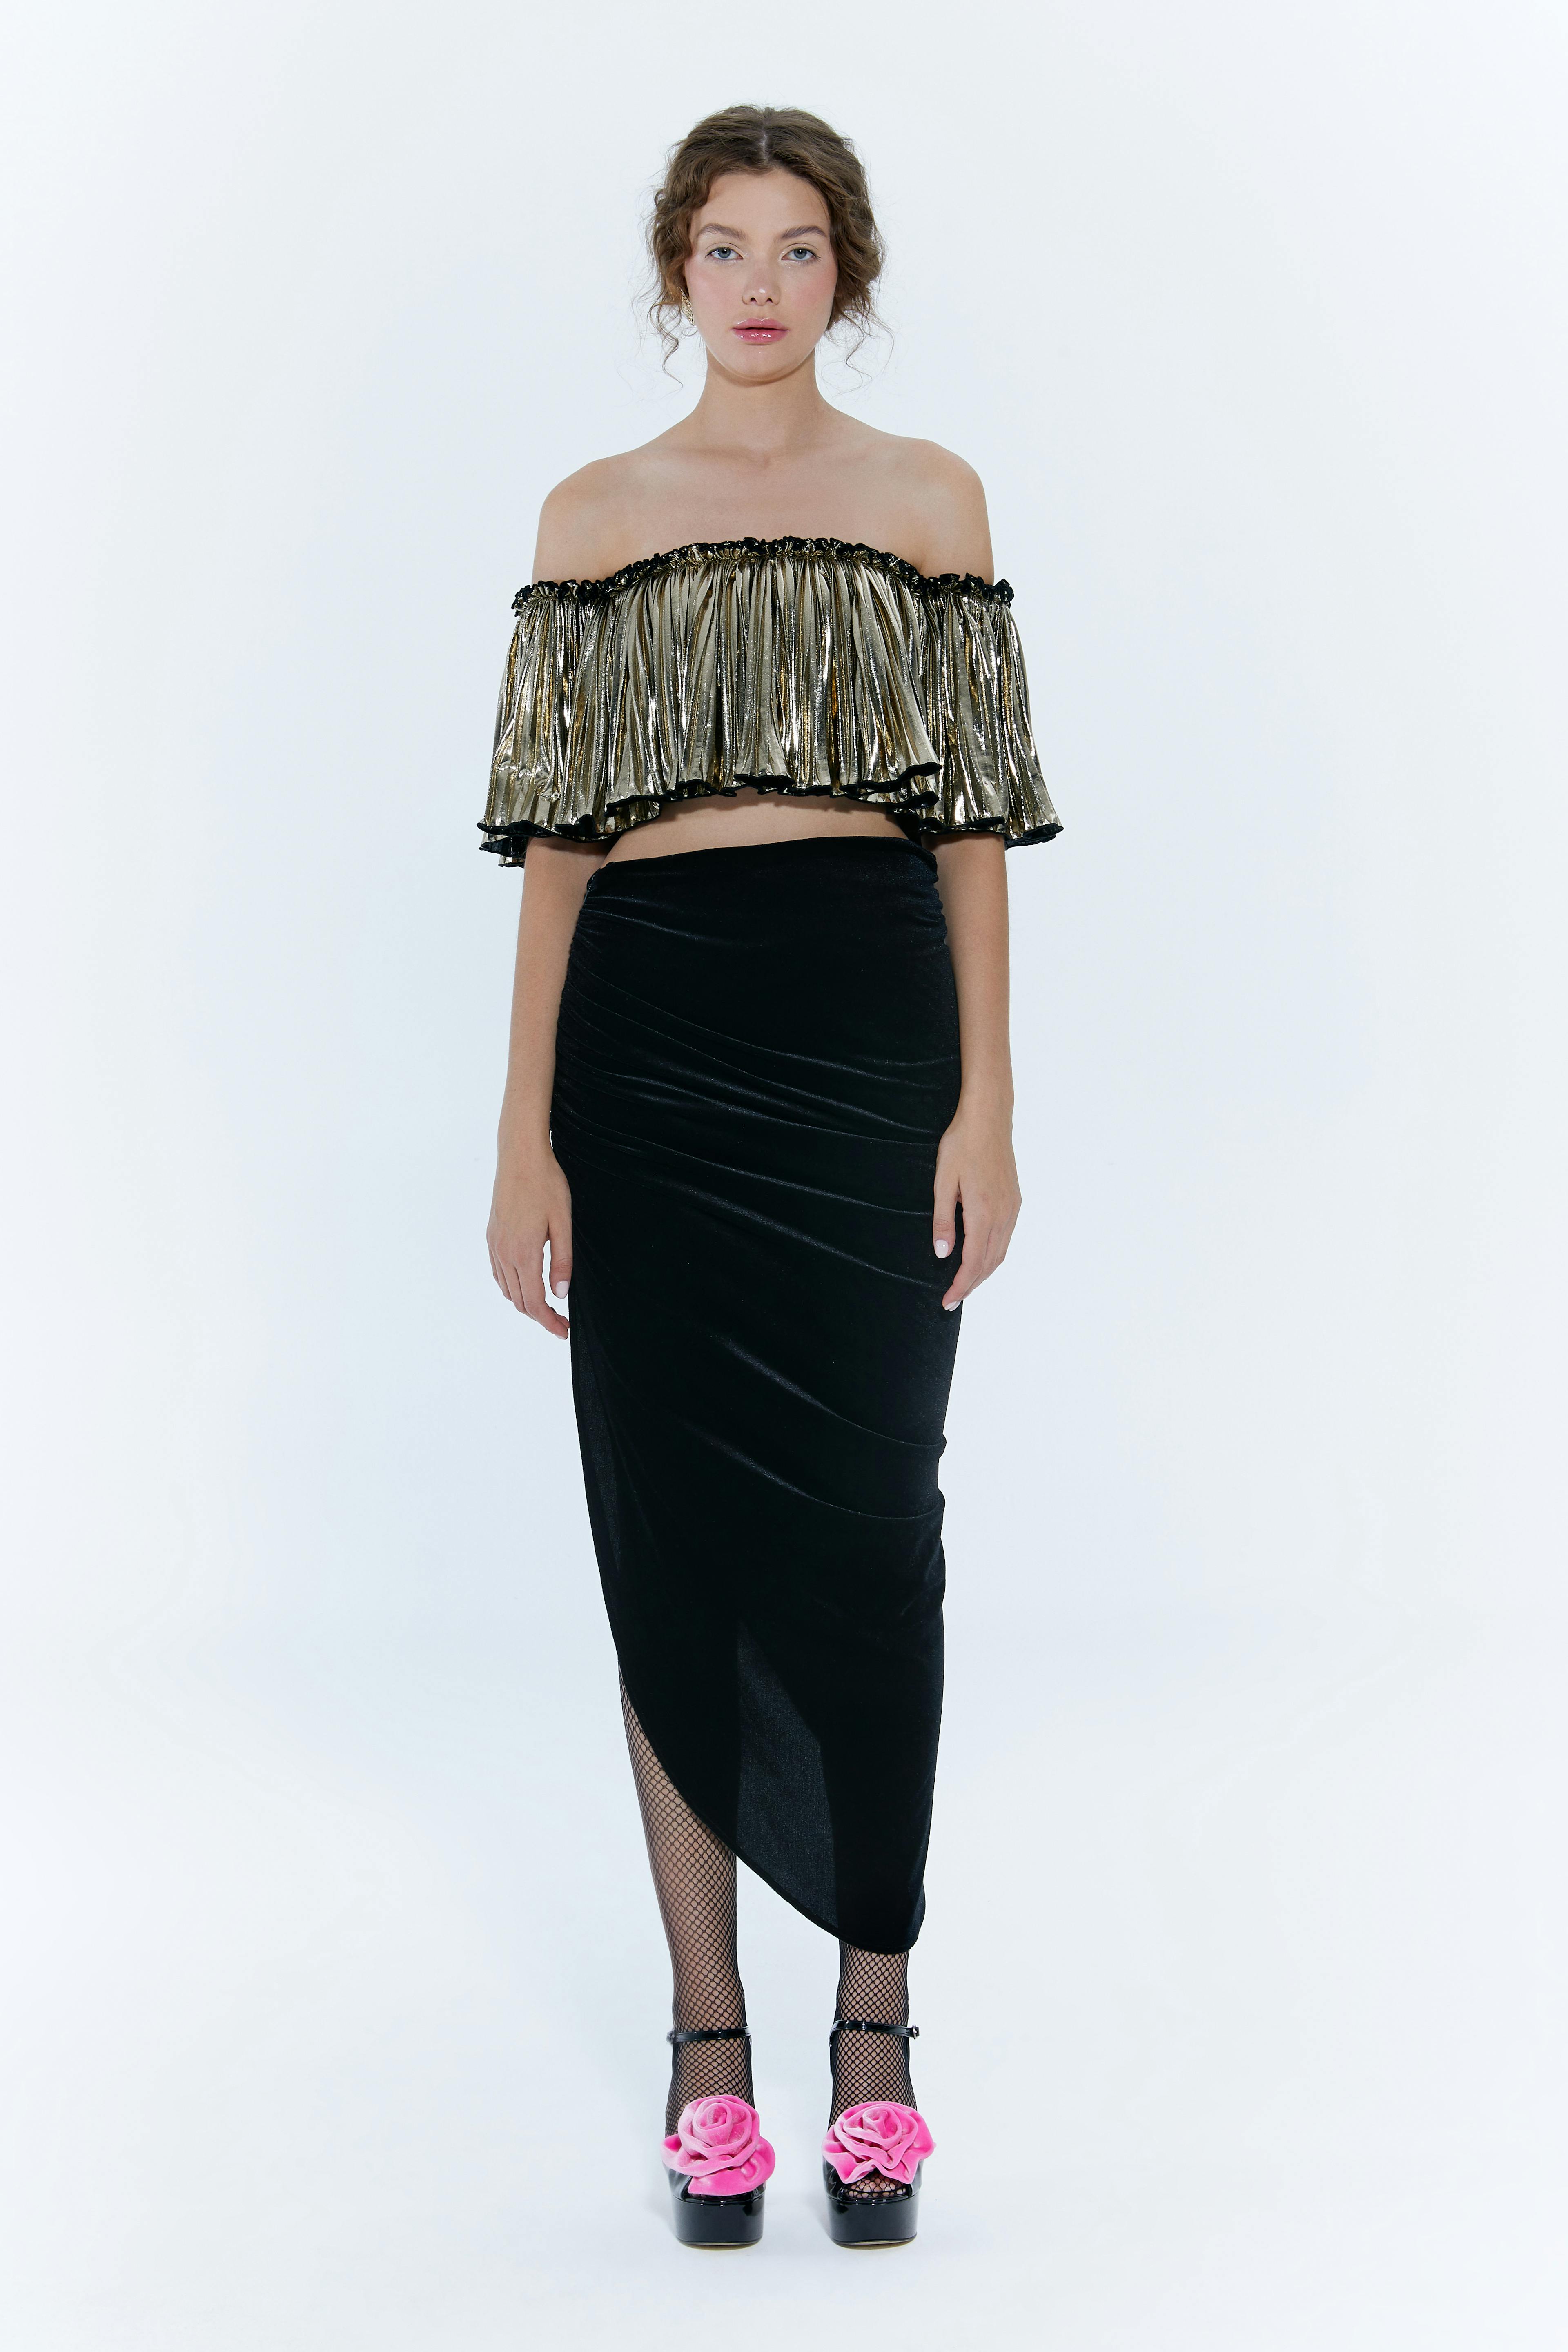 Copley Skirt & Top Set, a product by Nur Karaata